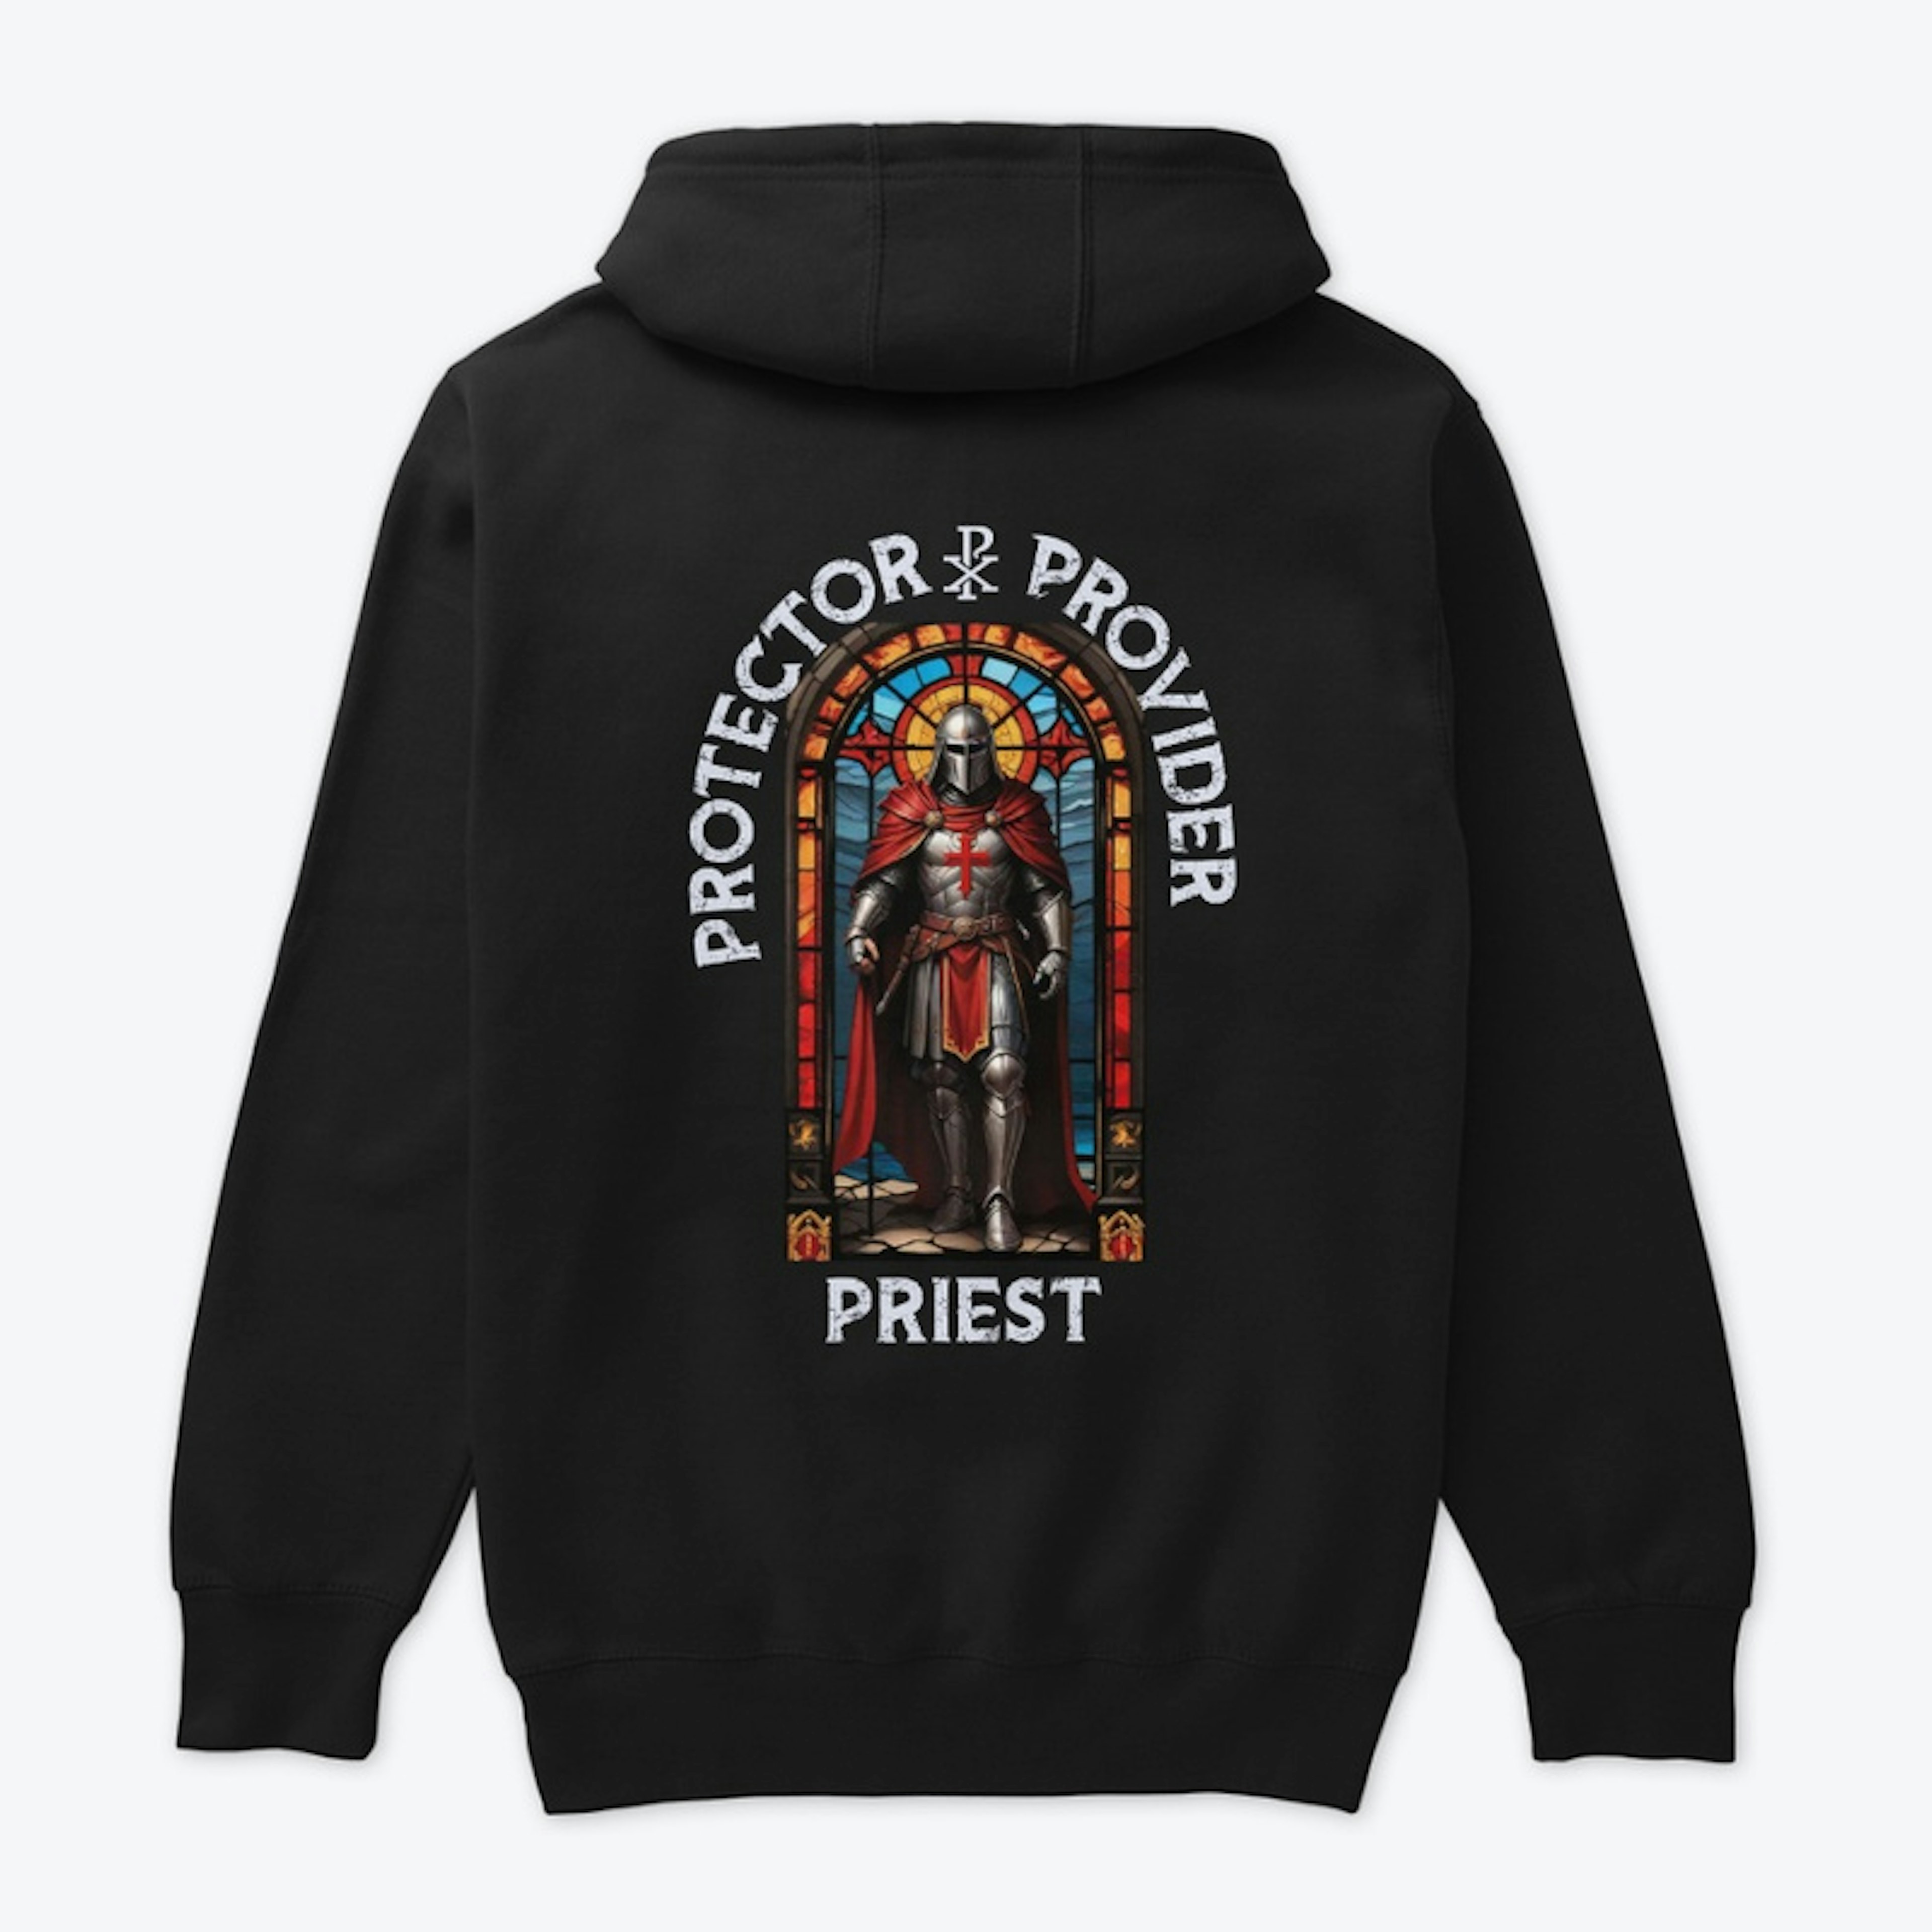 Priest, Protector, Provider Line